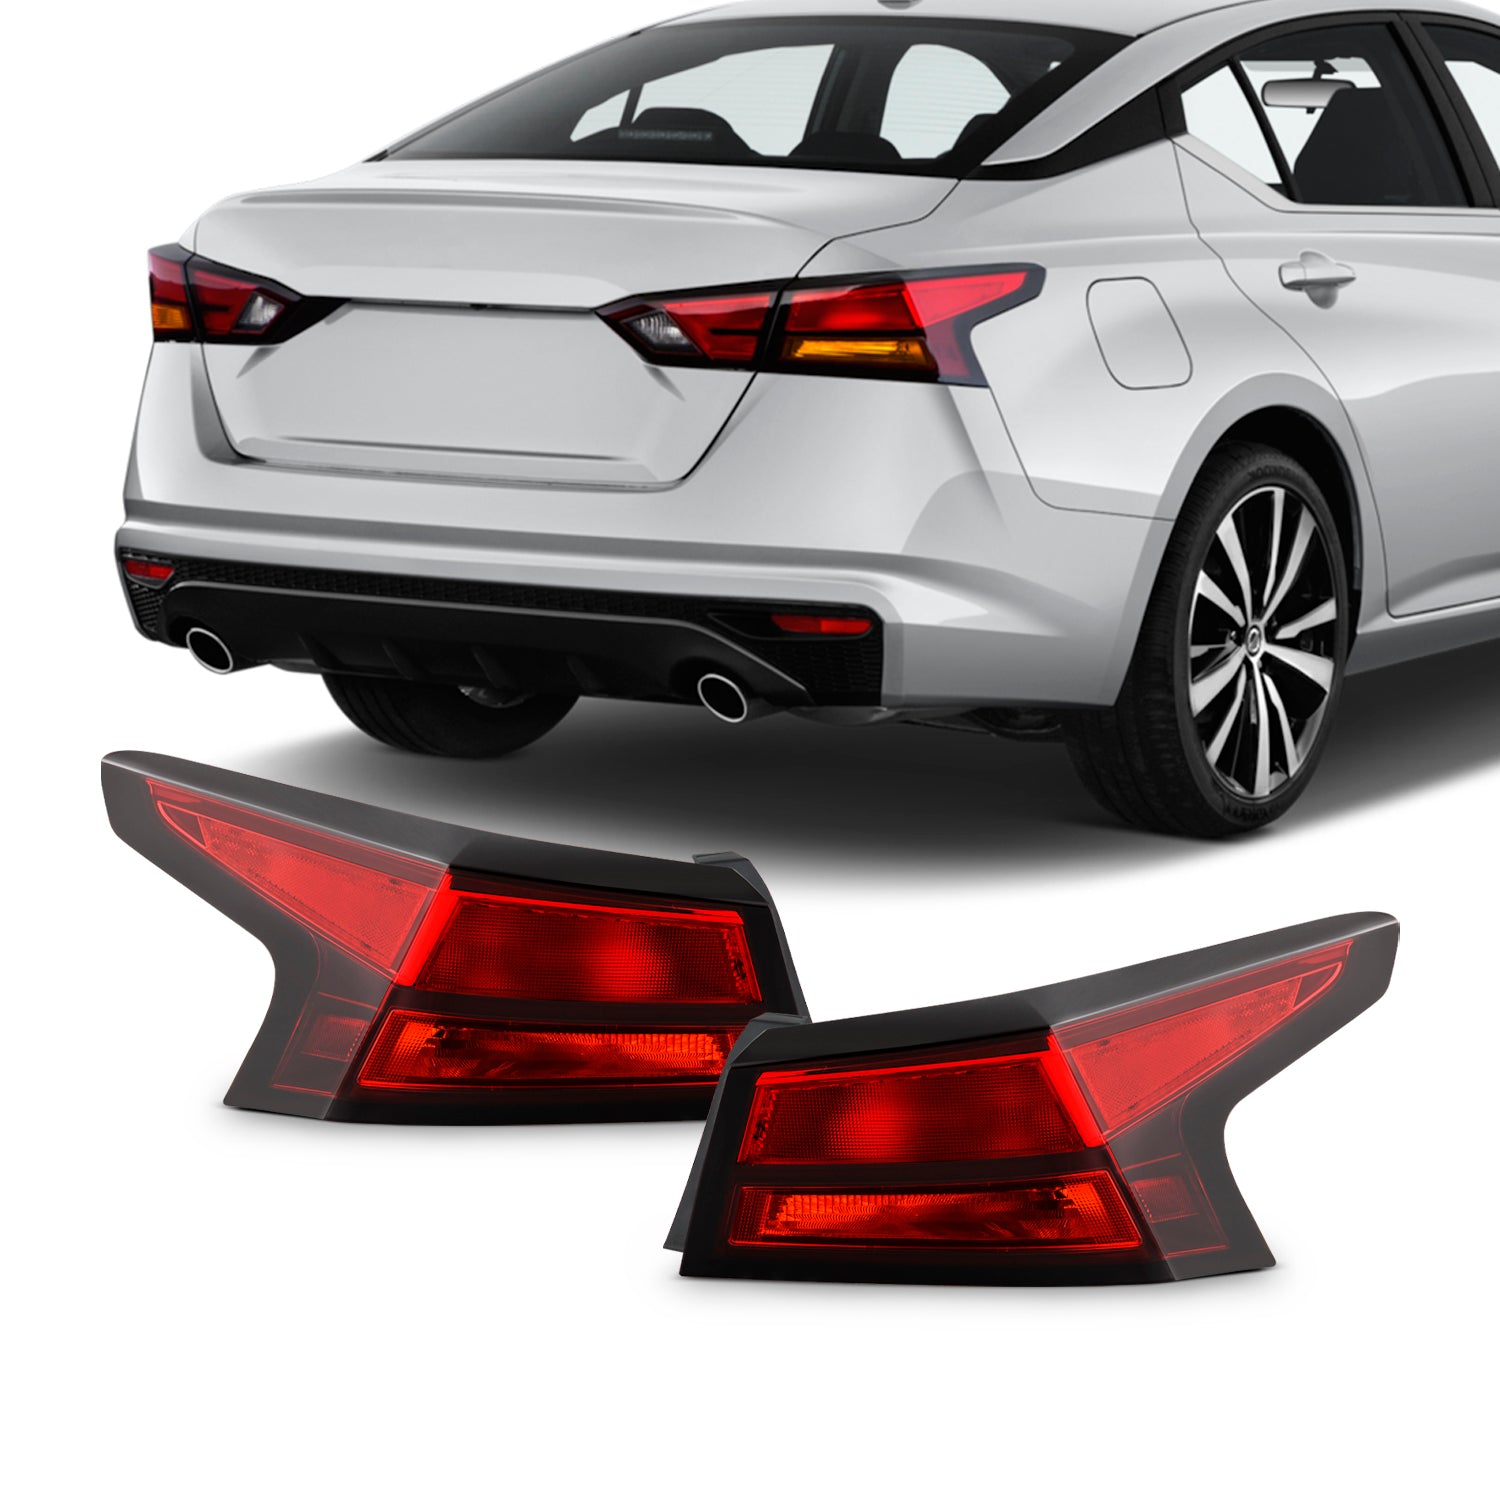 AKKON - Fits 2019-2022 Altima Sedan Model [Halogen Type] All Red Tail